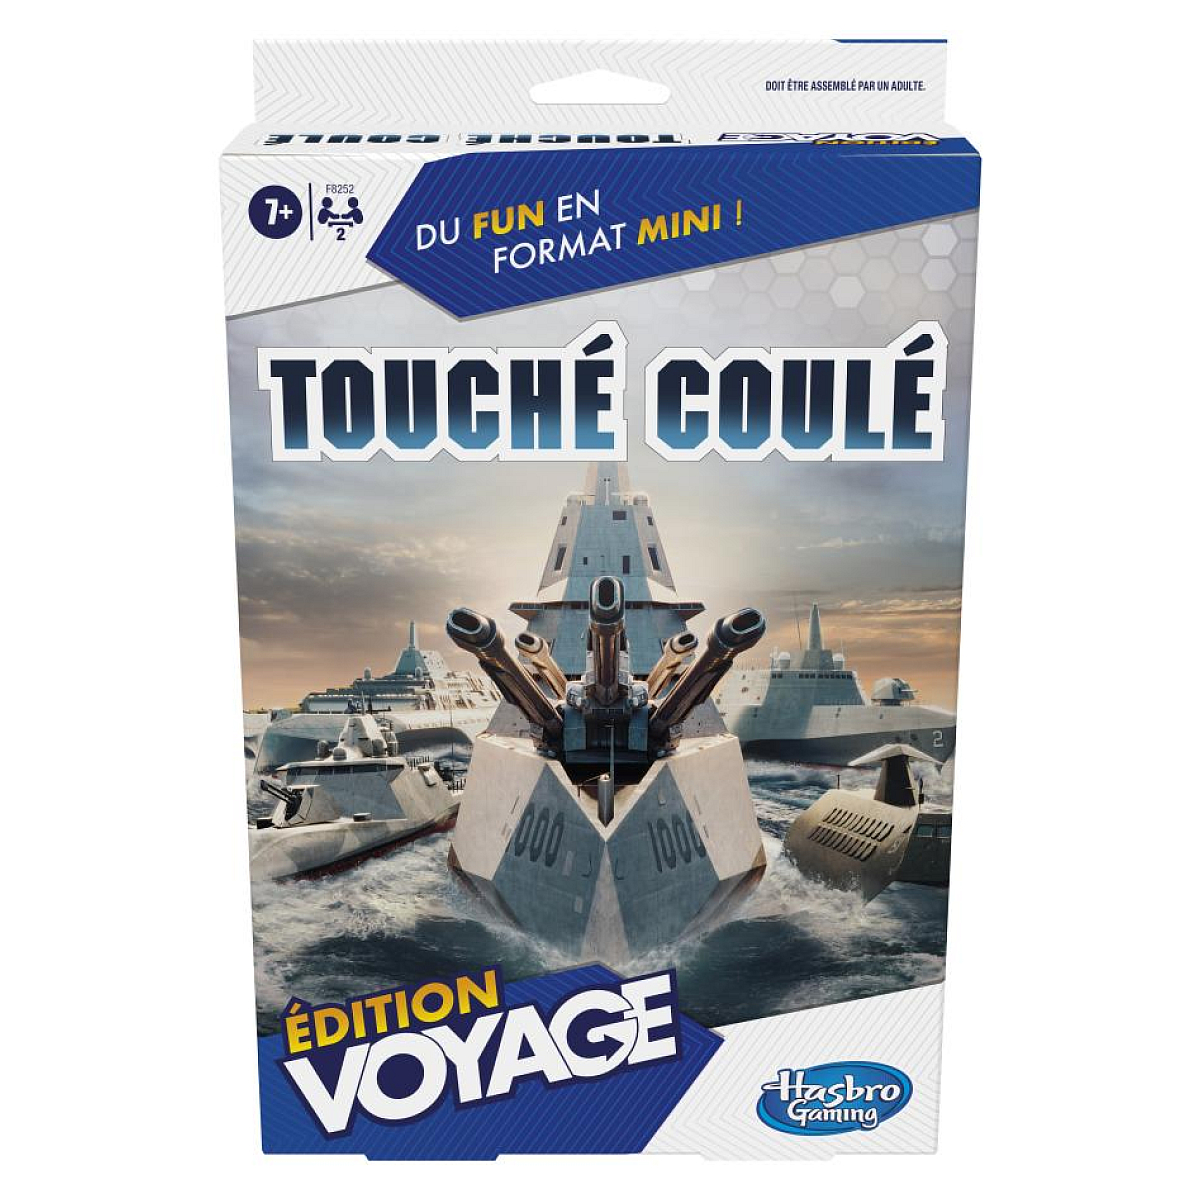 Touche coule - edition voyage